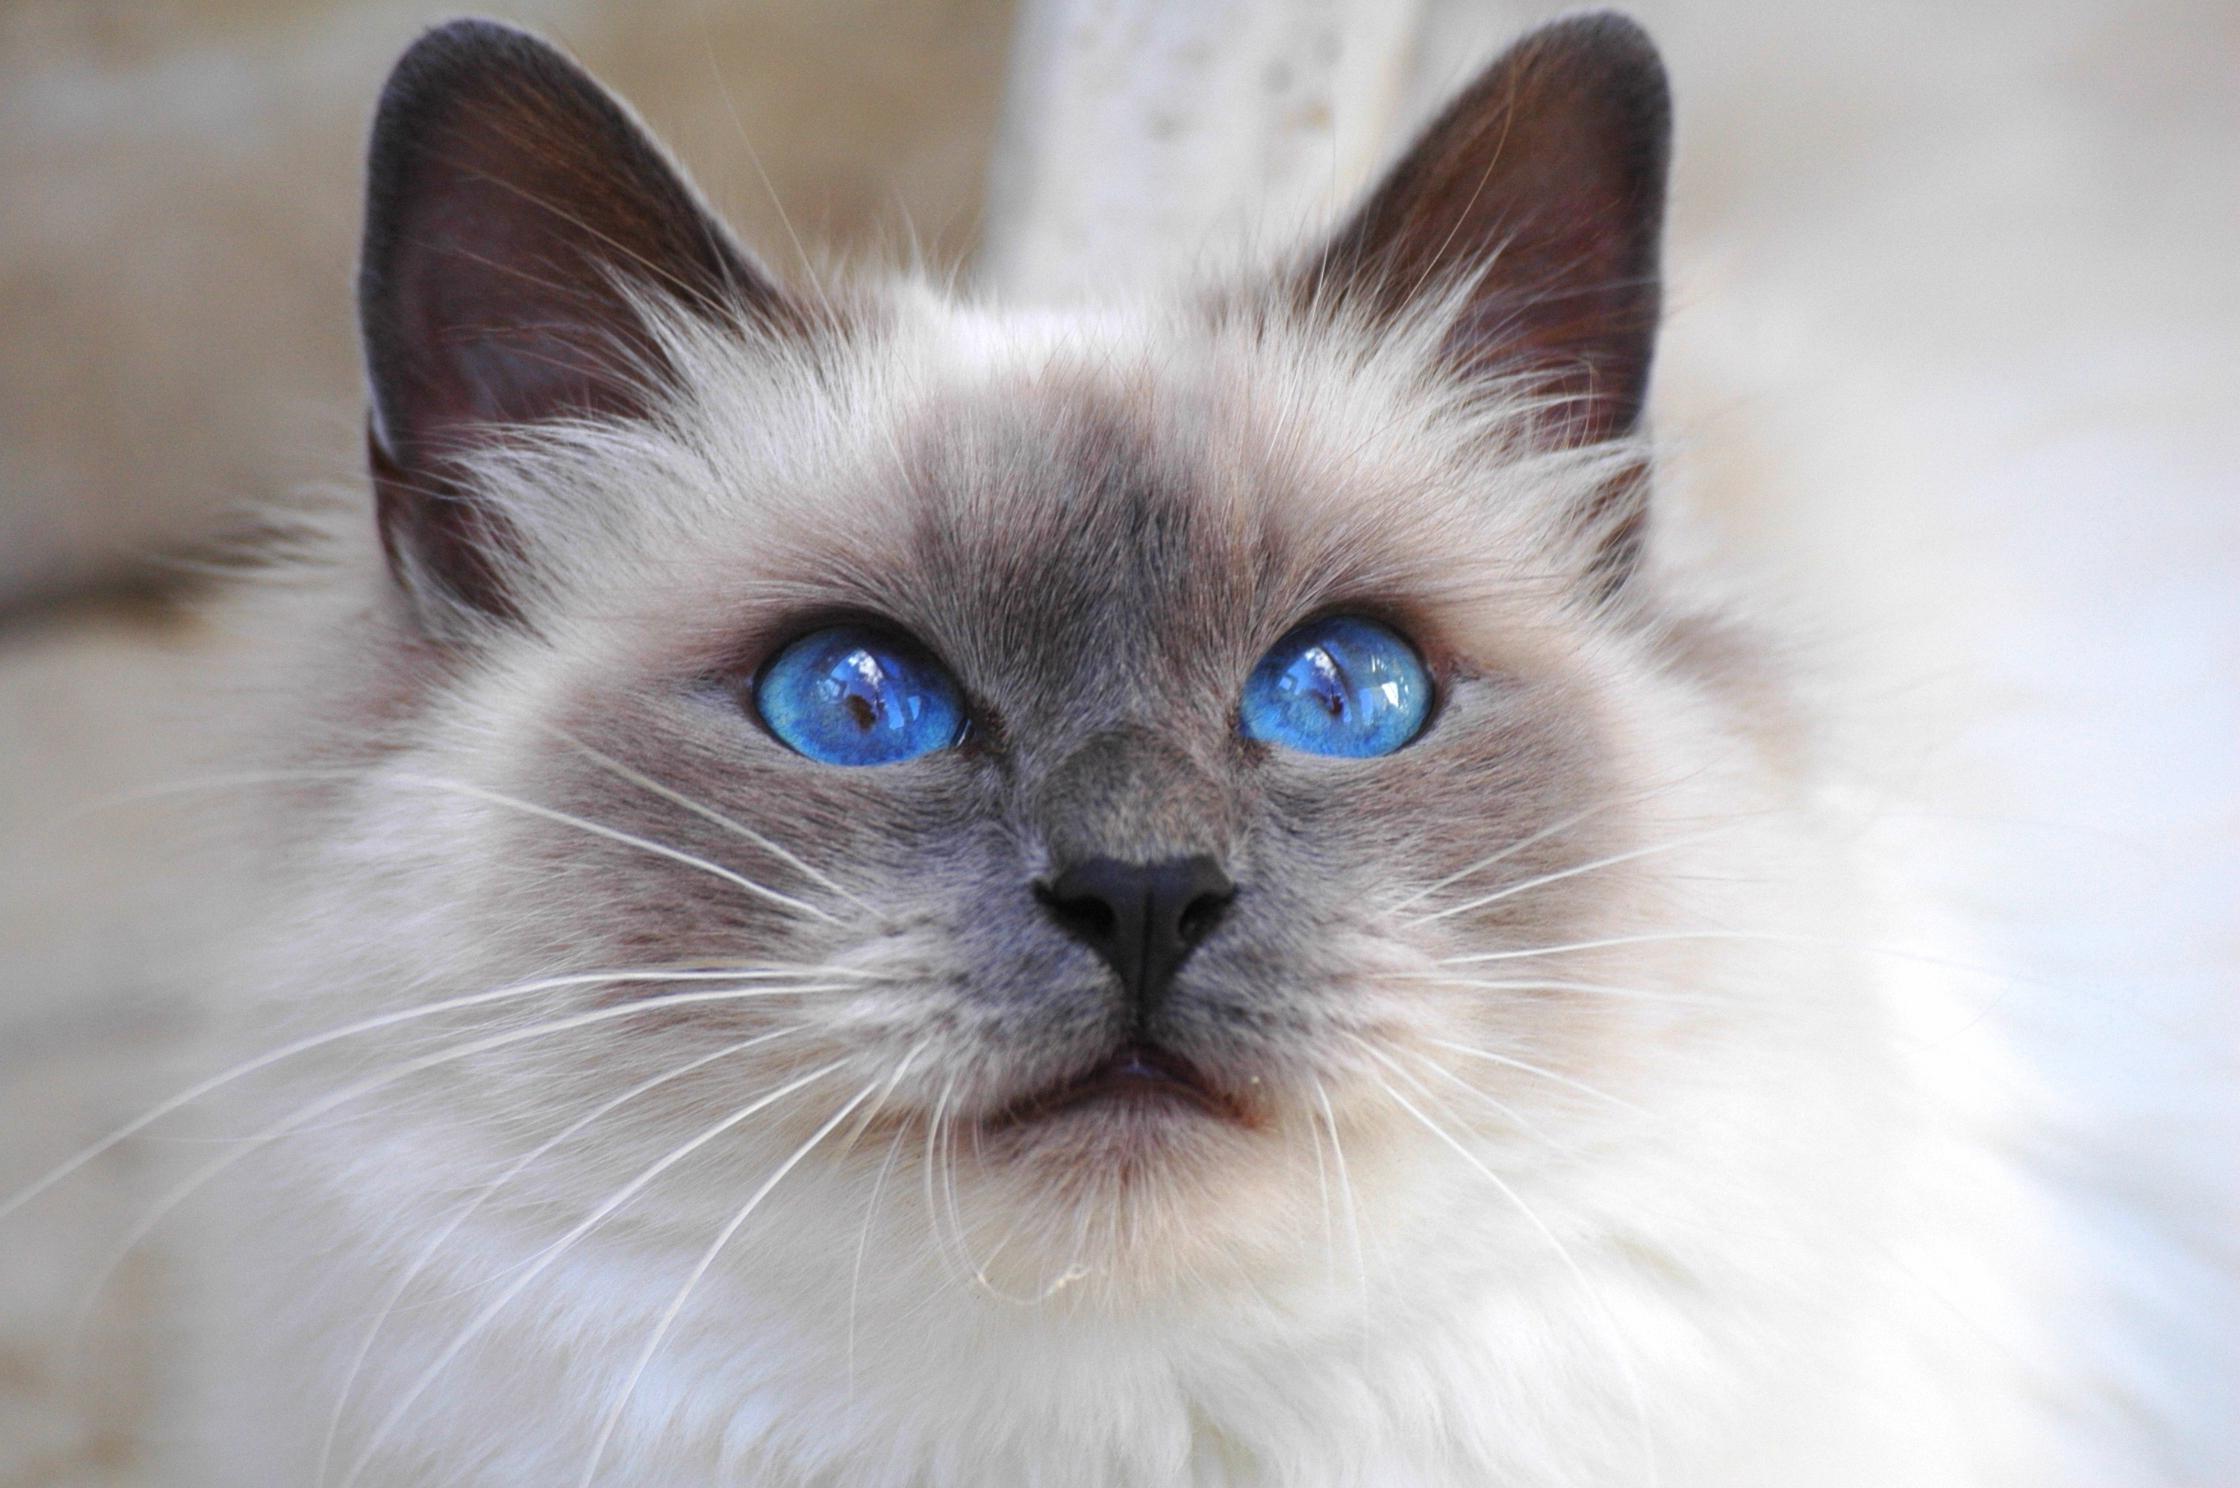 381150 descargar imagen animales, gato, ojos azules, ojo, cara, esponjoso, gris, gatos: fondos de pantalla y protectores de pantalla gratis